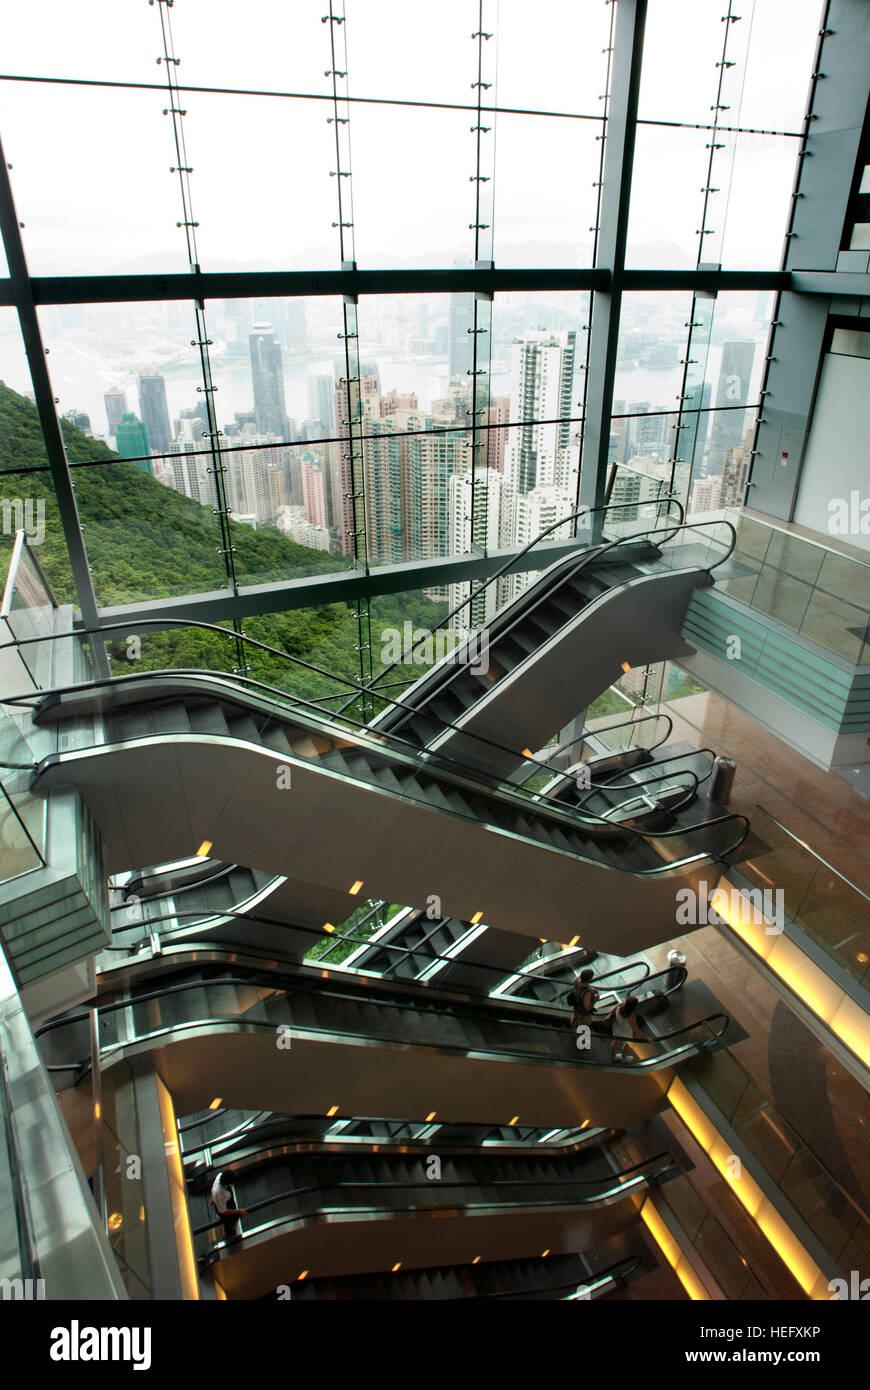 Visitors on escalators inside the Victoria New Peak Tower, Hong Kong, China Stock Photo